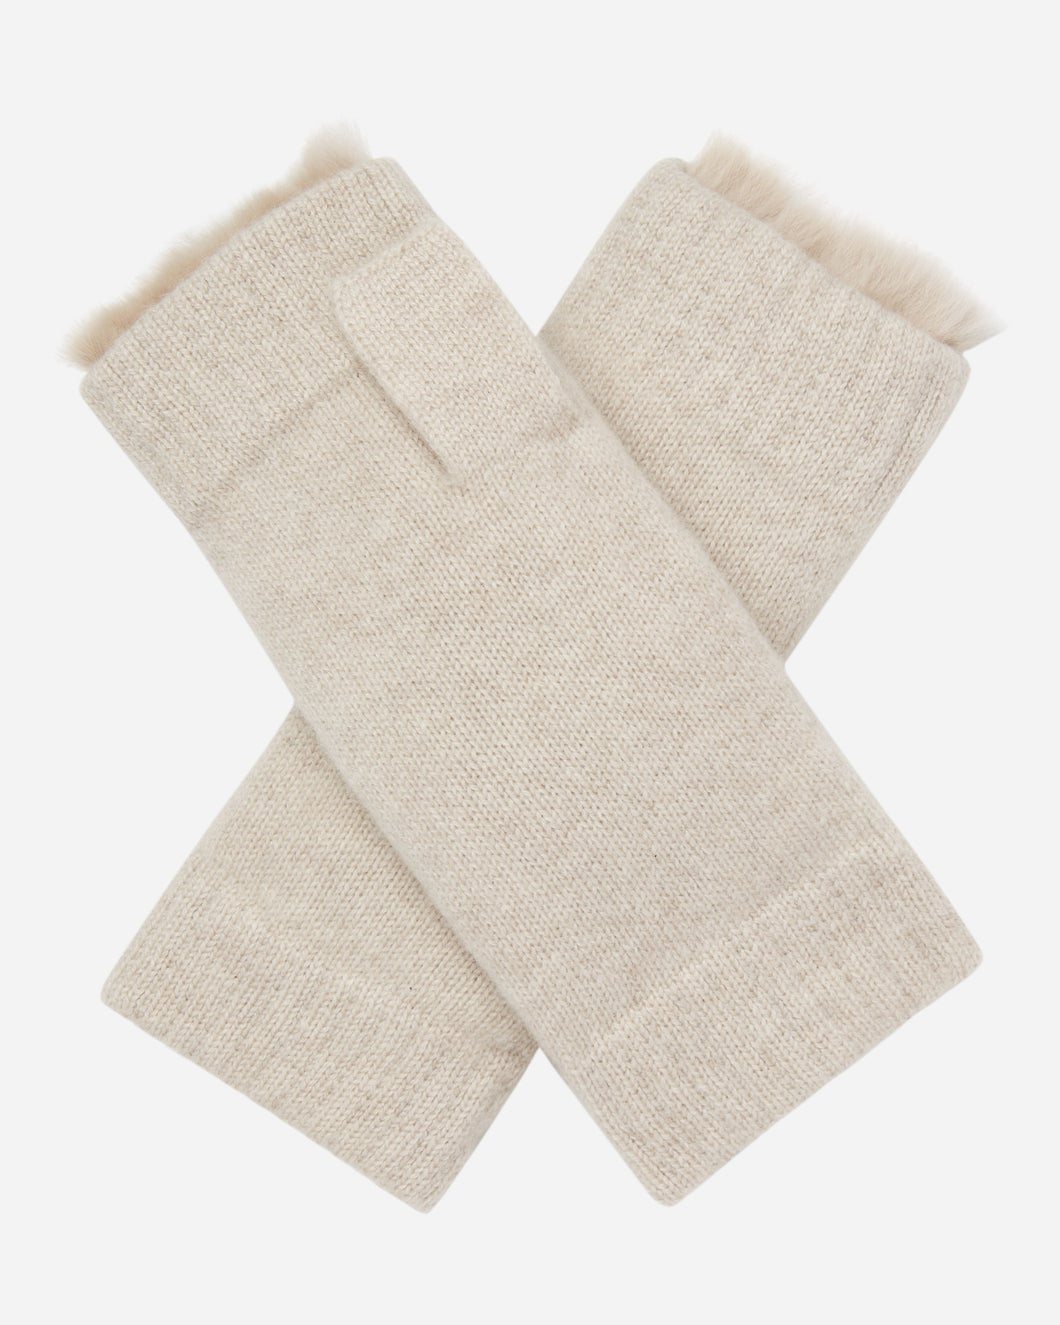 Fur Lined Fingerless Cashmere Gloves Ecru White + Sand Brown